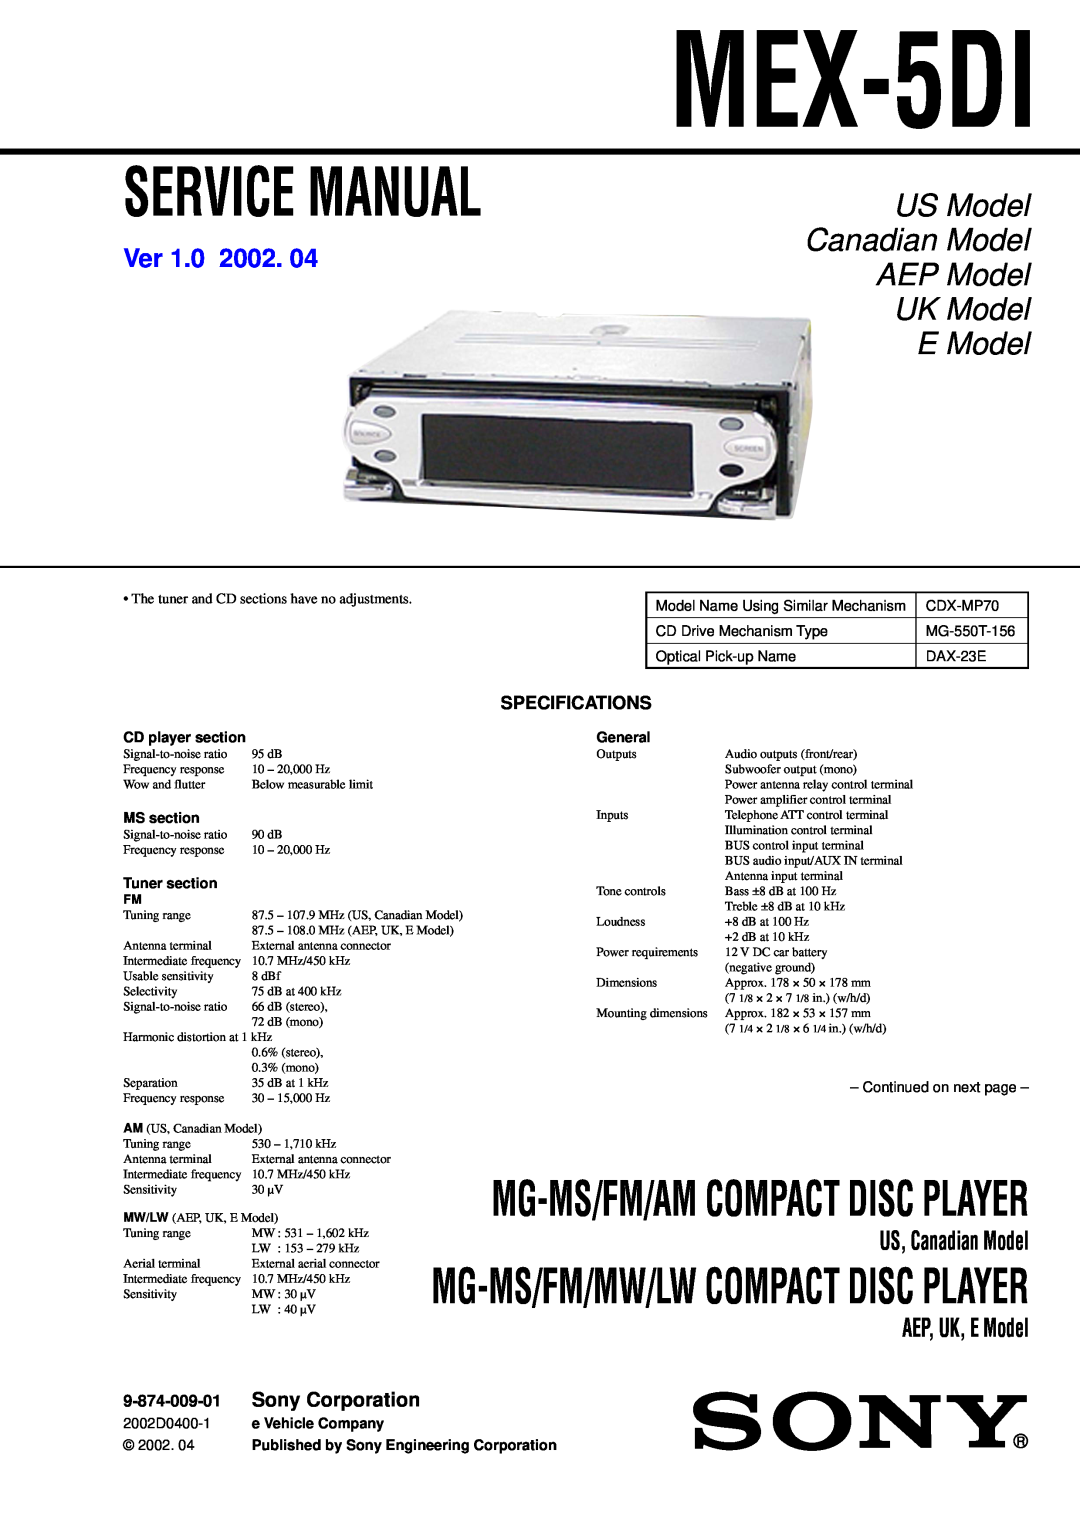 Sony MEX-5DI service manual Specifications, US Model Canadian Model AEP Model UK Model, E Model, Ver, US, Canadian Model 